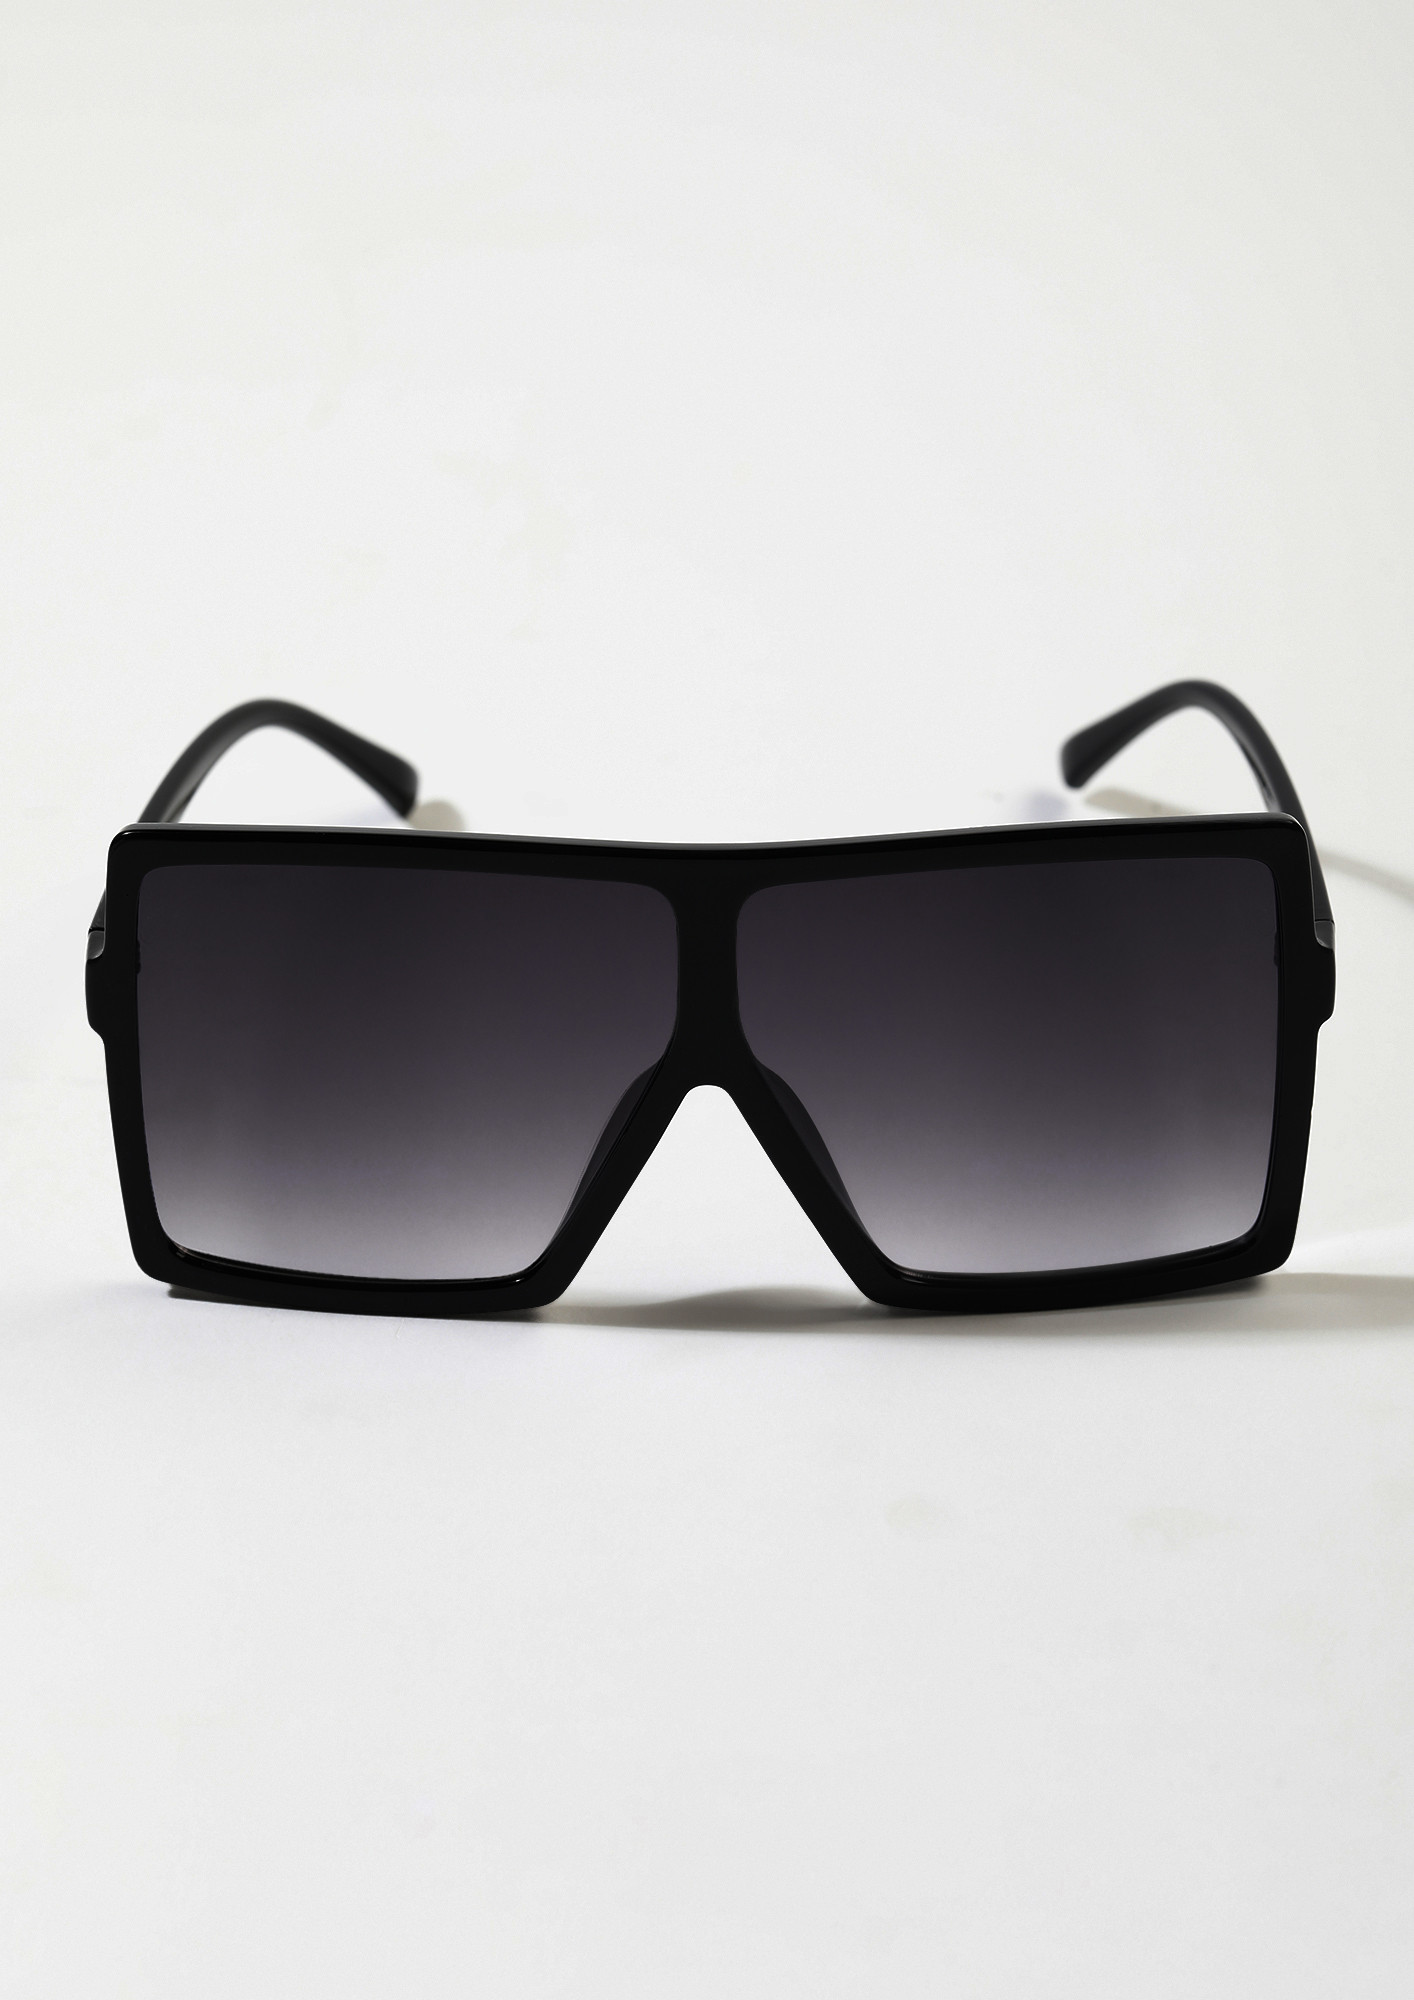 Going Undercover Black Flat Top Square Sunglasses